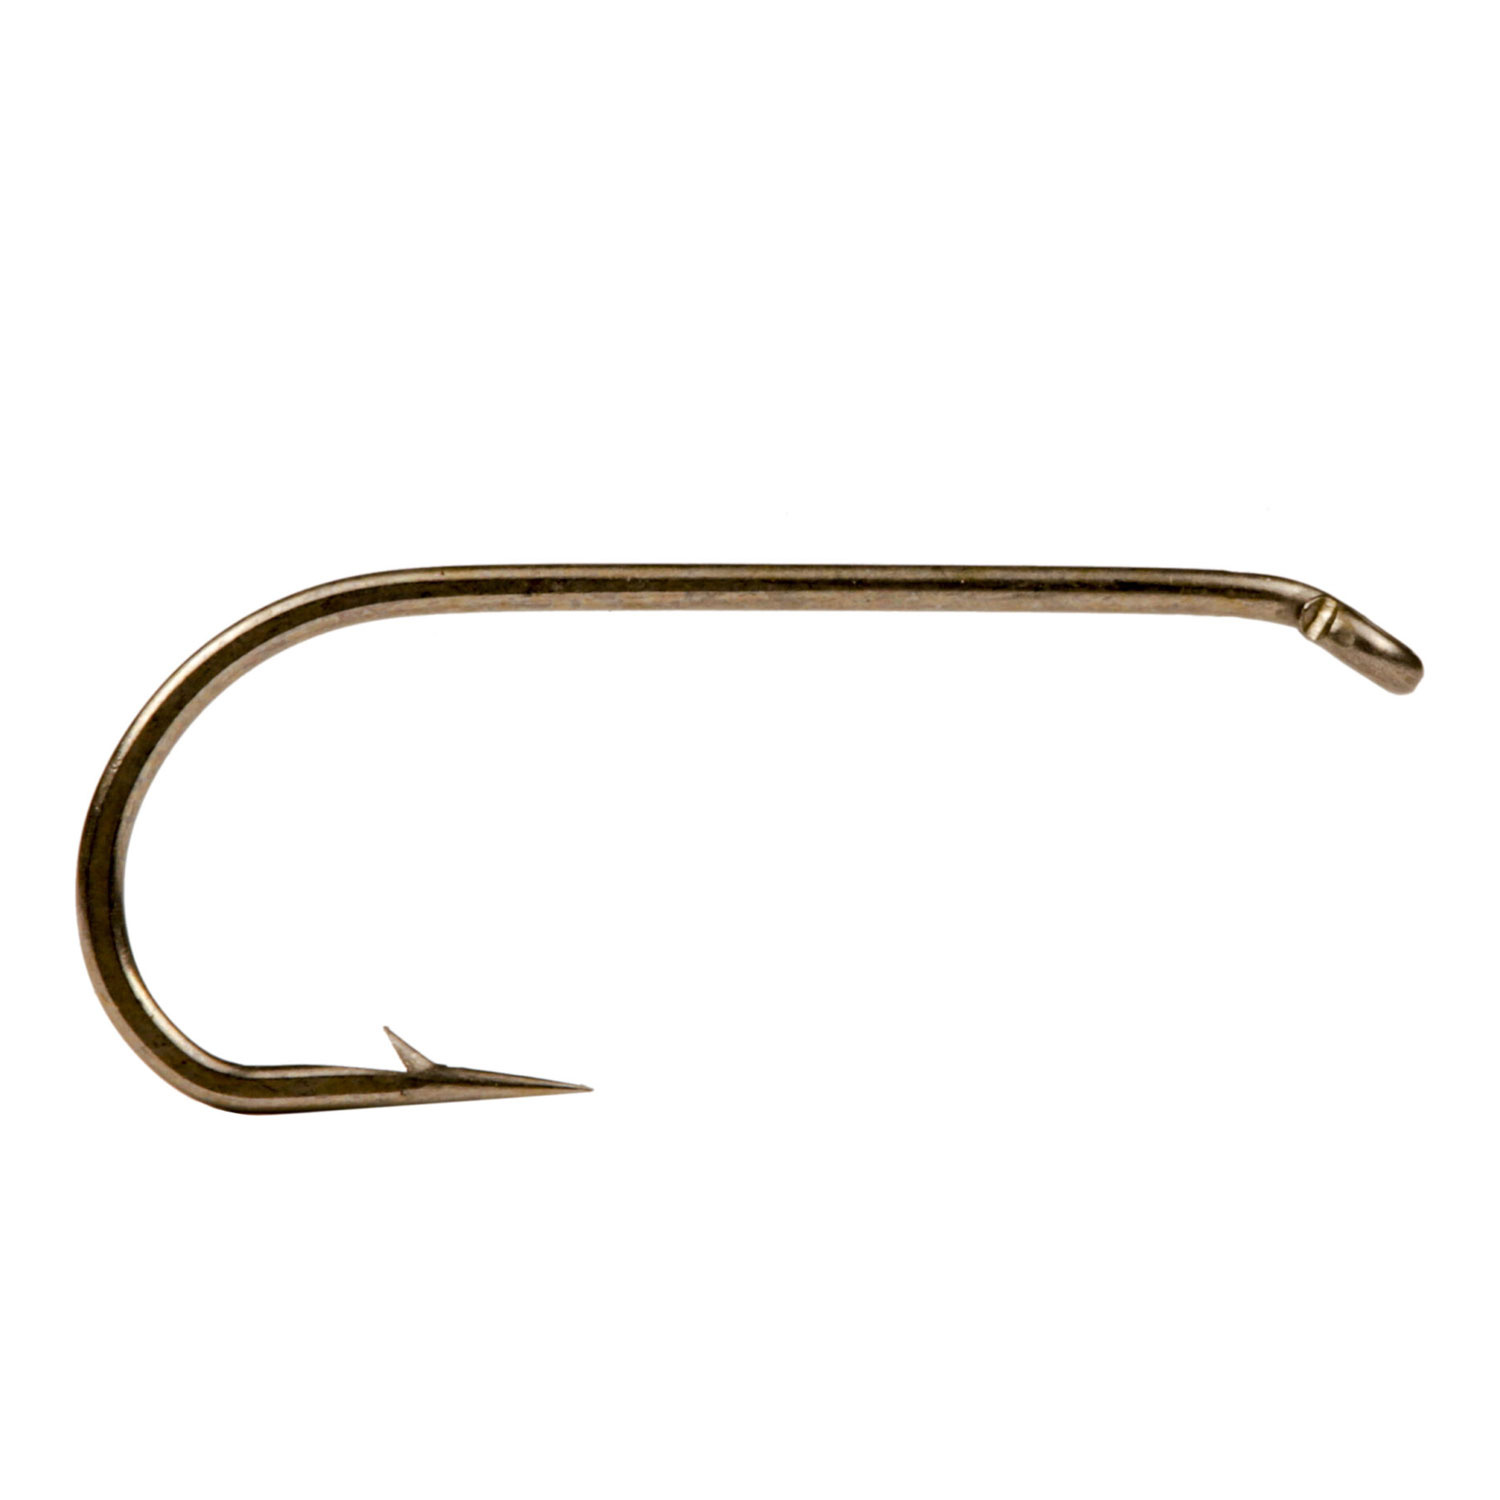 Sprite Hooks All Purpose Dry Bronze S1401 100-pack